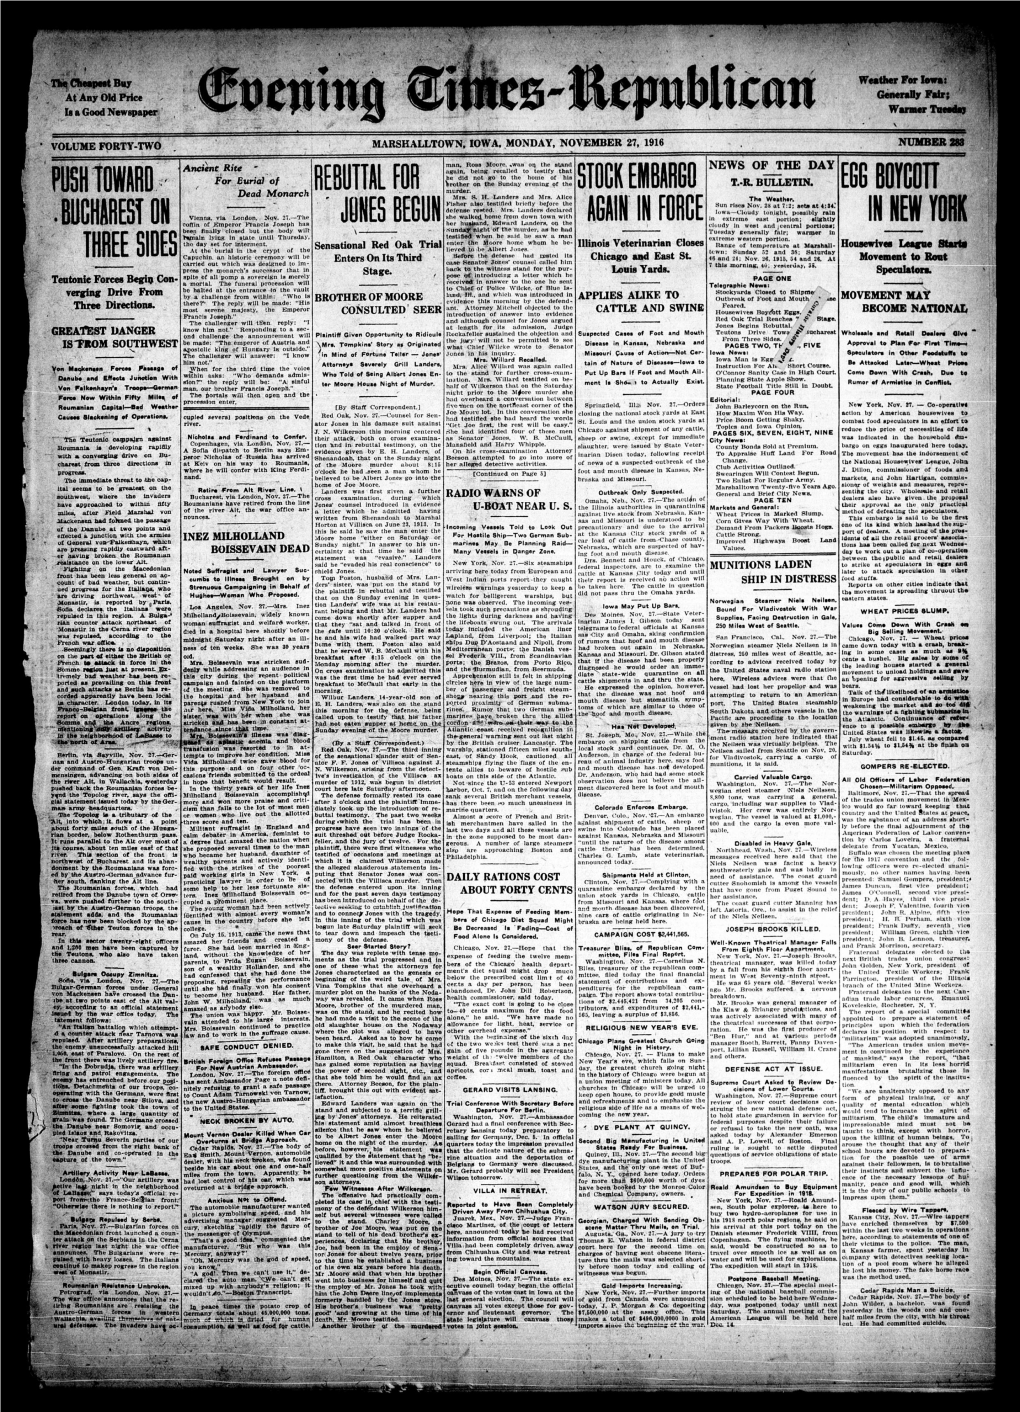 Evening Times-Republican (Marshalltown, Iowa). 1916-11-27